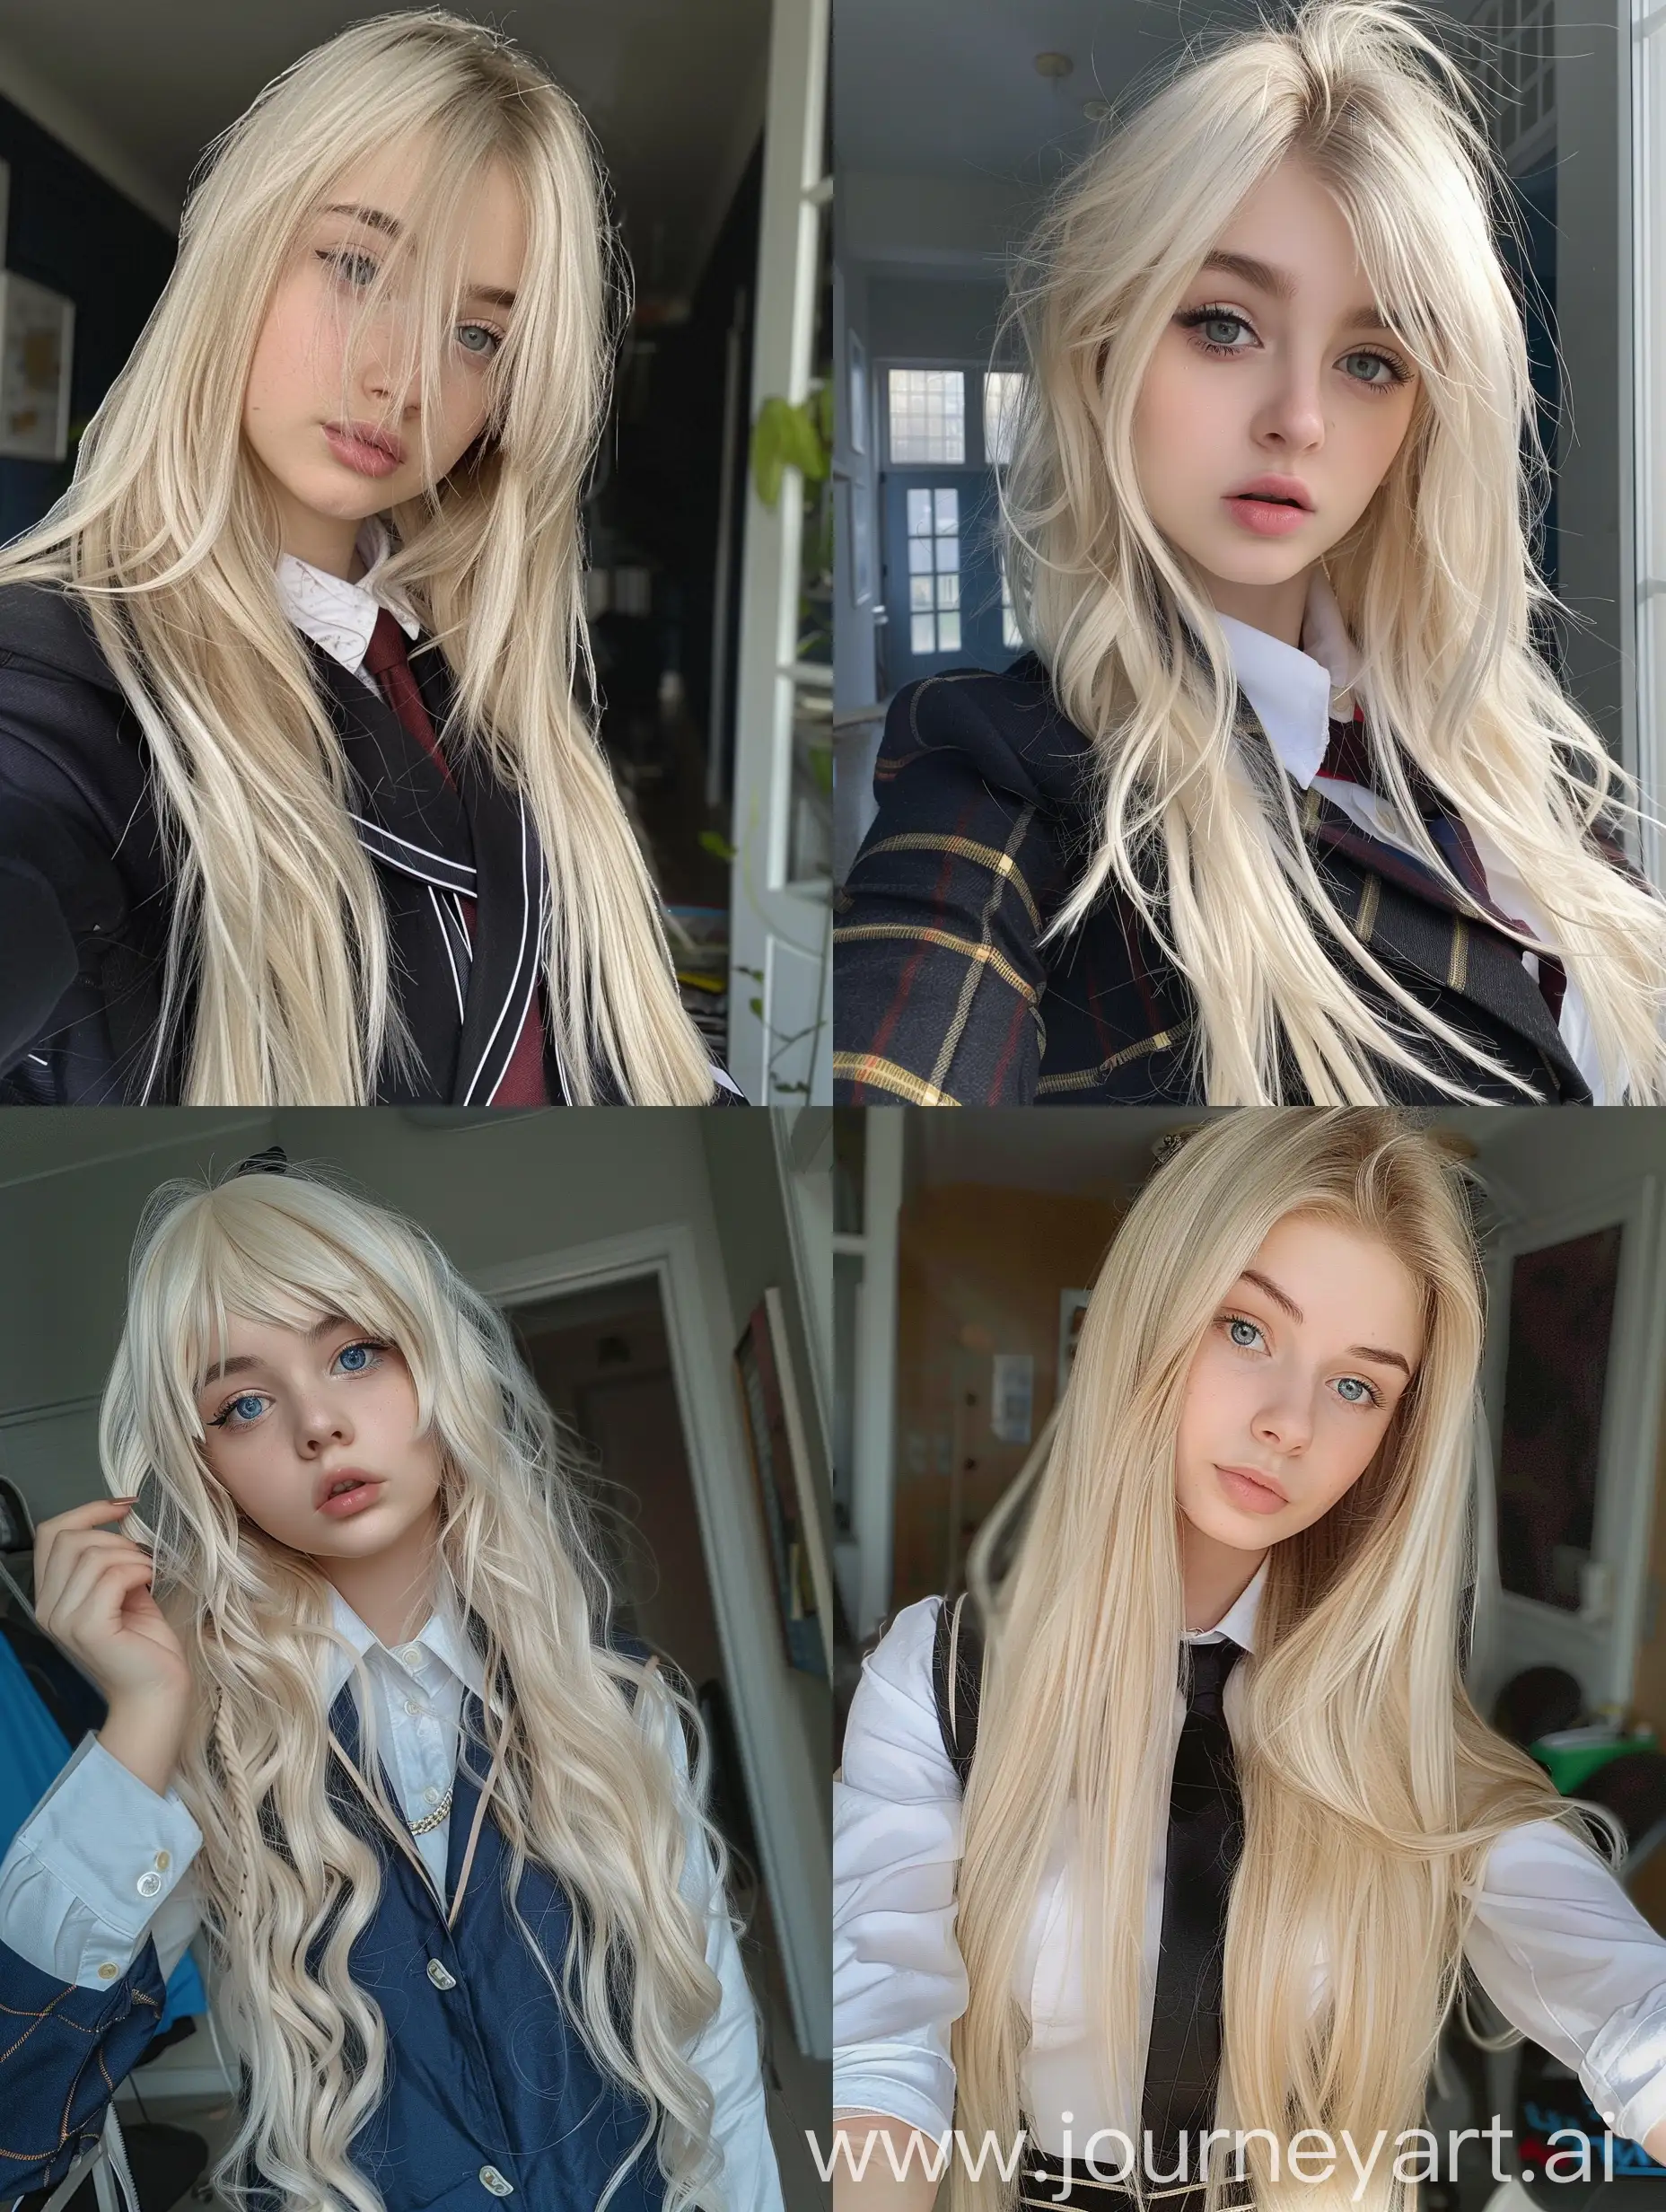 Young-Blonde-Girl-in-School-Uniform-Taking-Selfie-with-iPhone